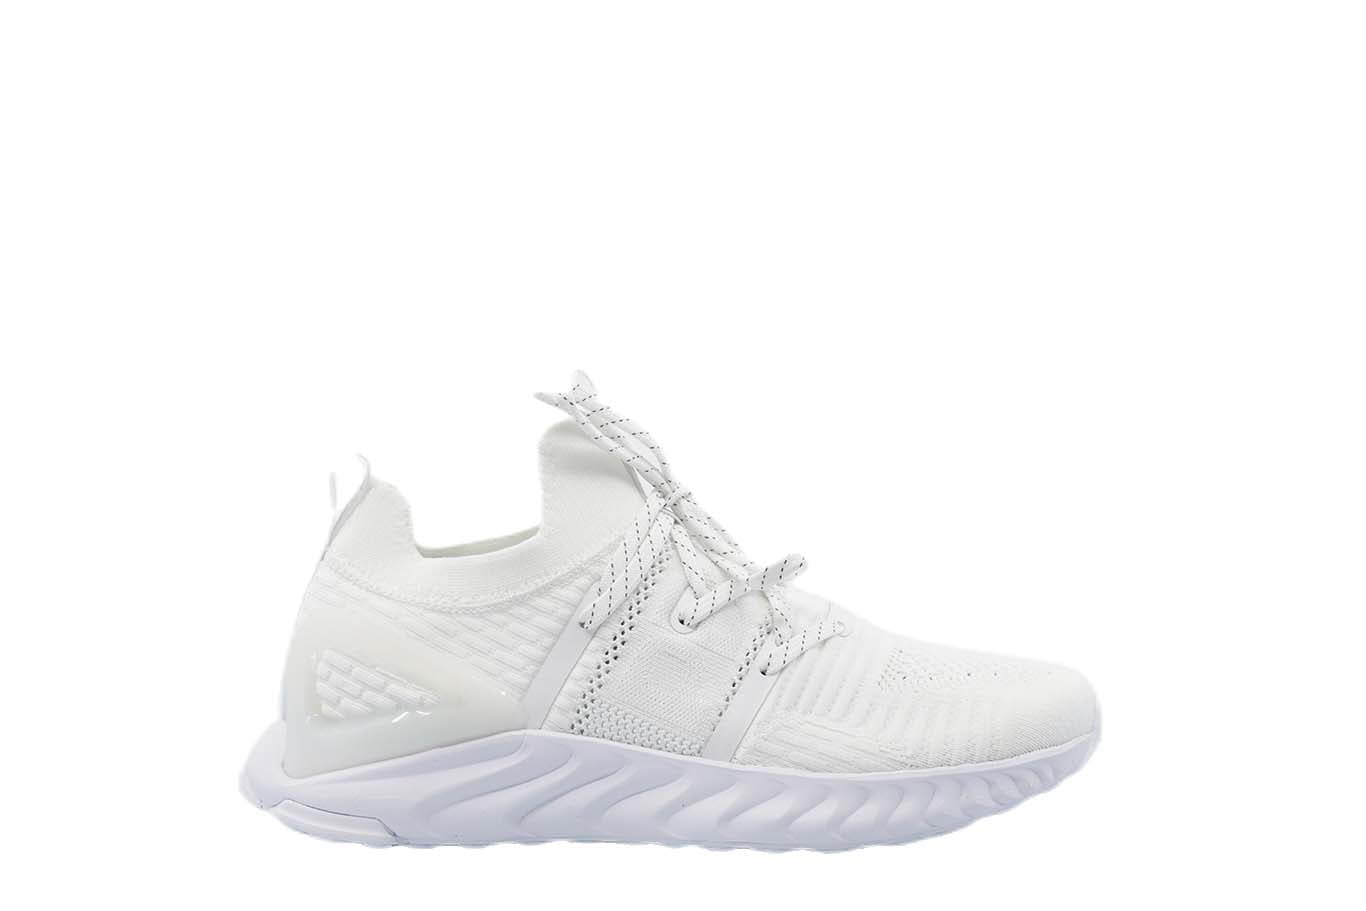 Mens Peak Taichi 2.0 White Running Shoes E91617 